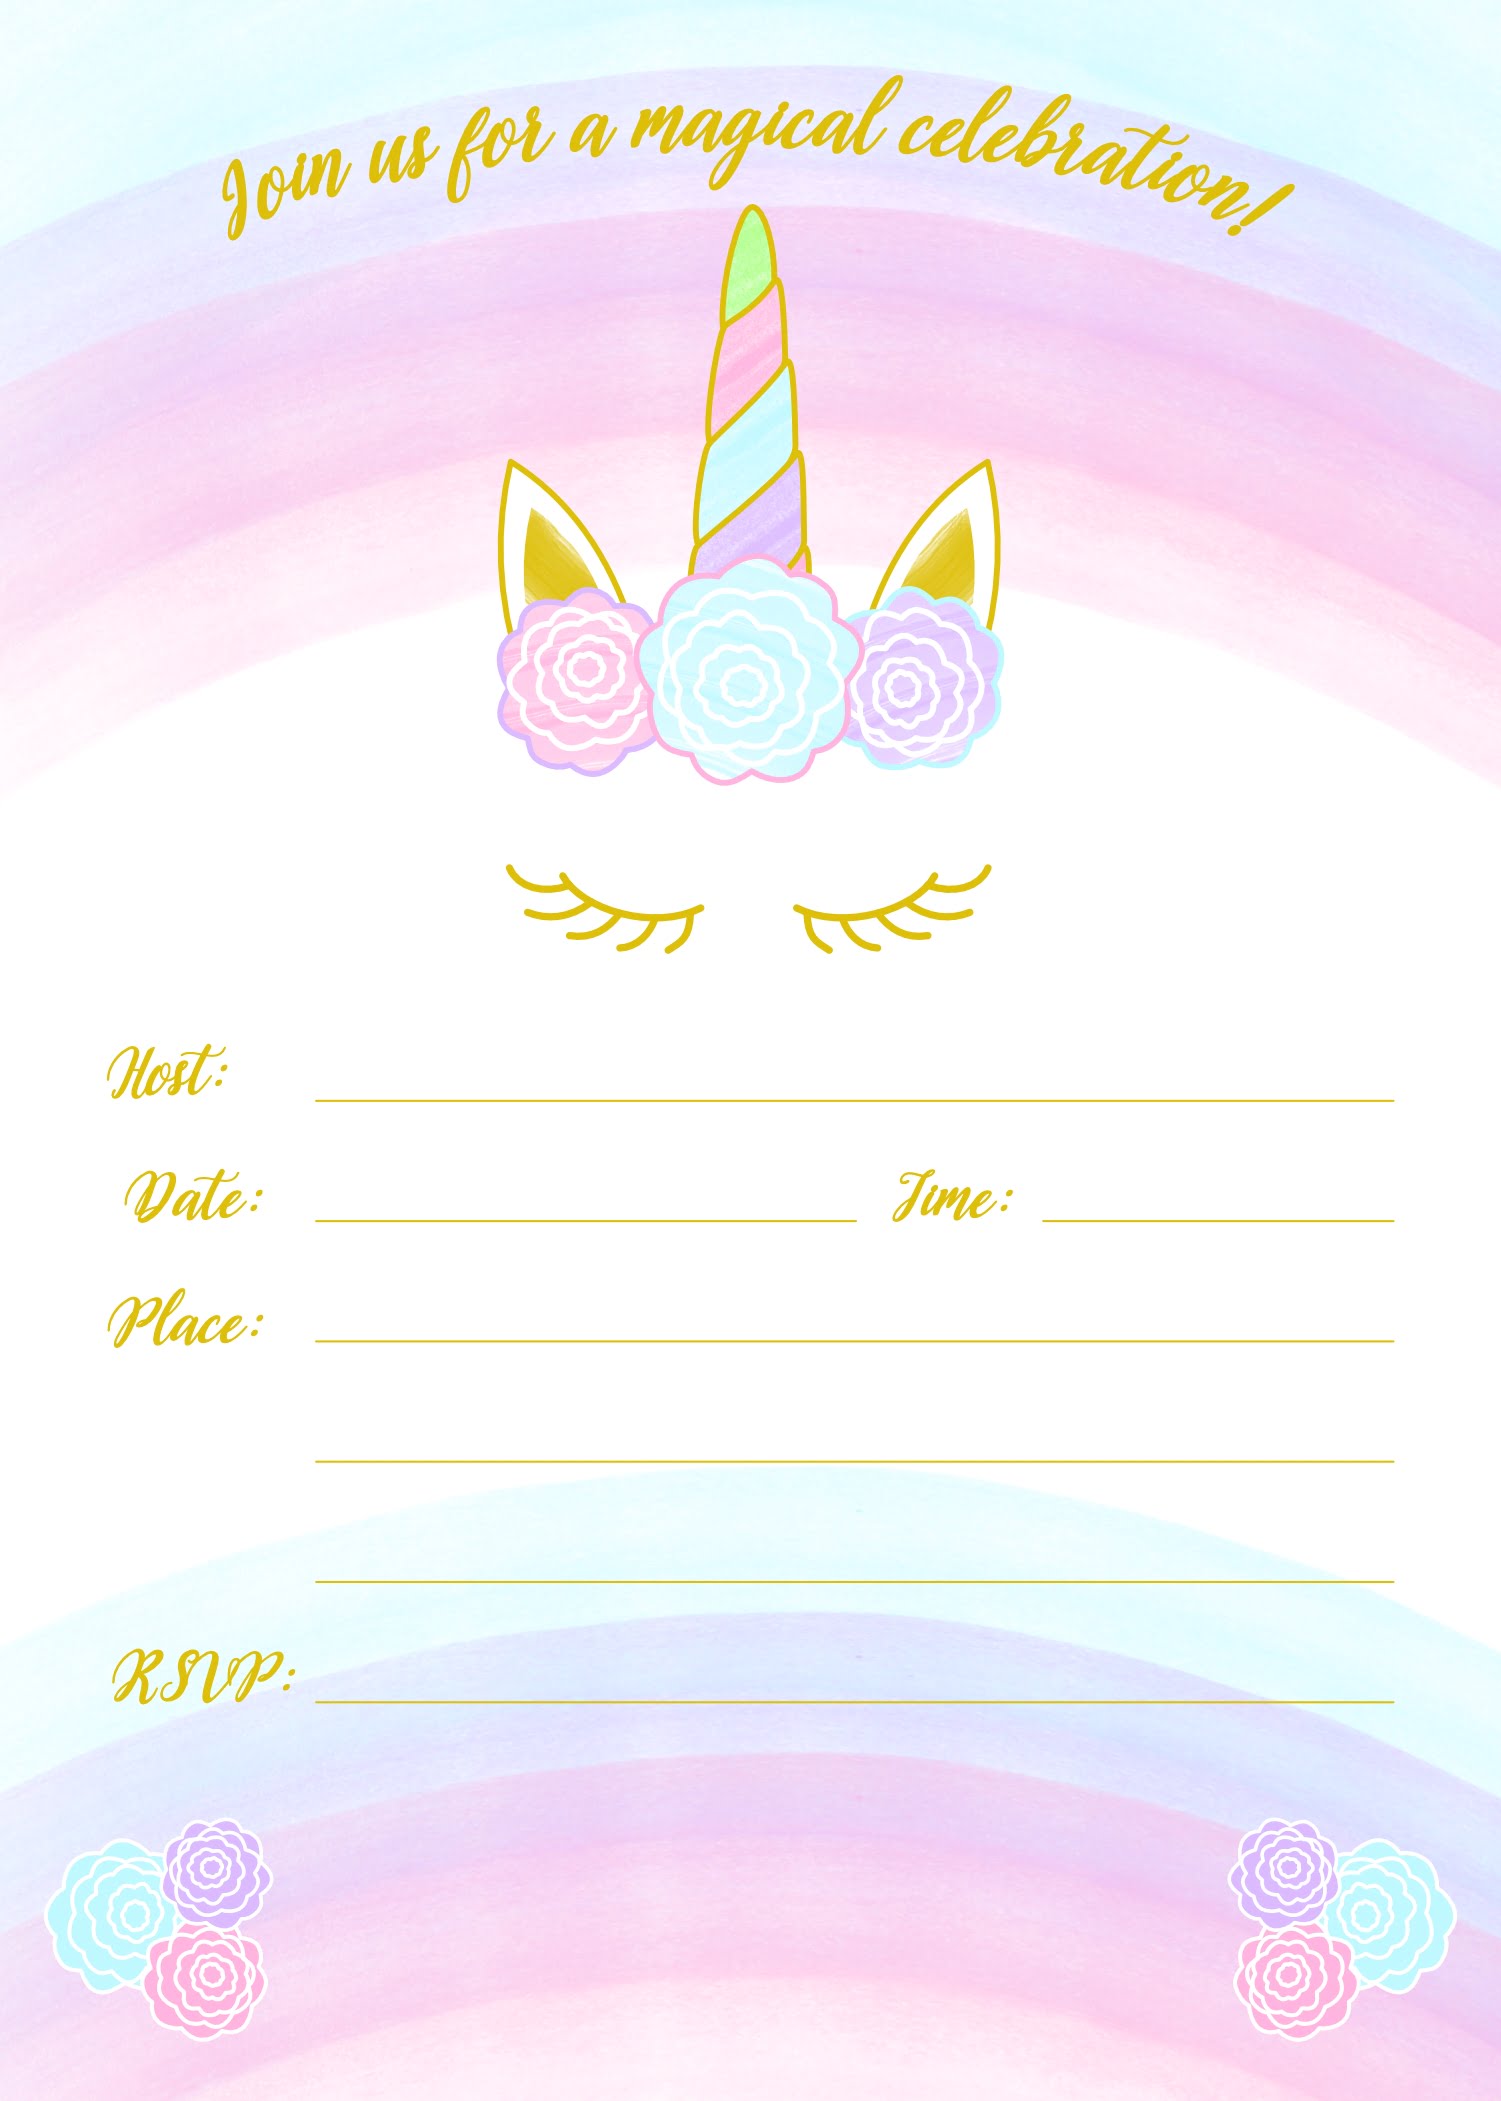 Printable Birthday Invitations Unicorn